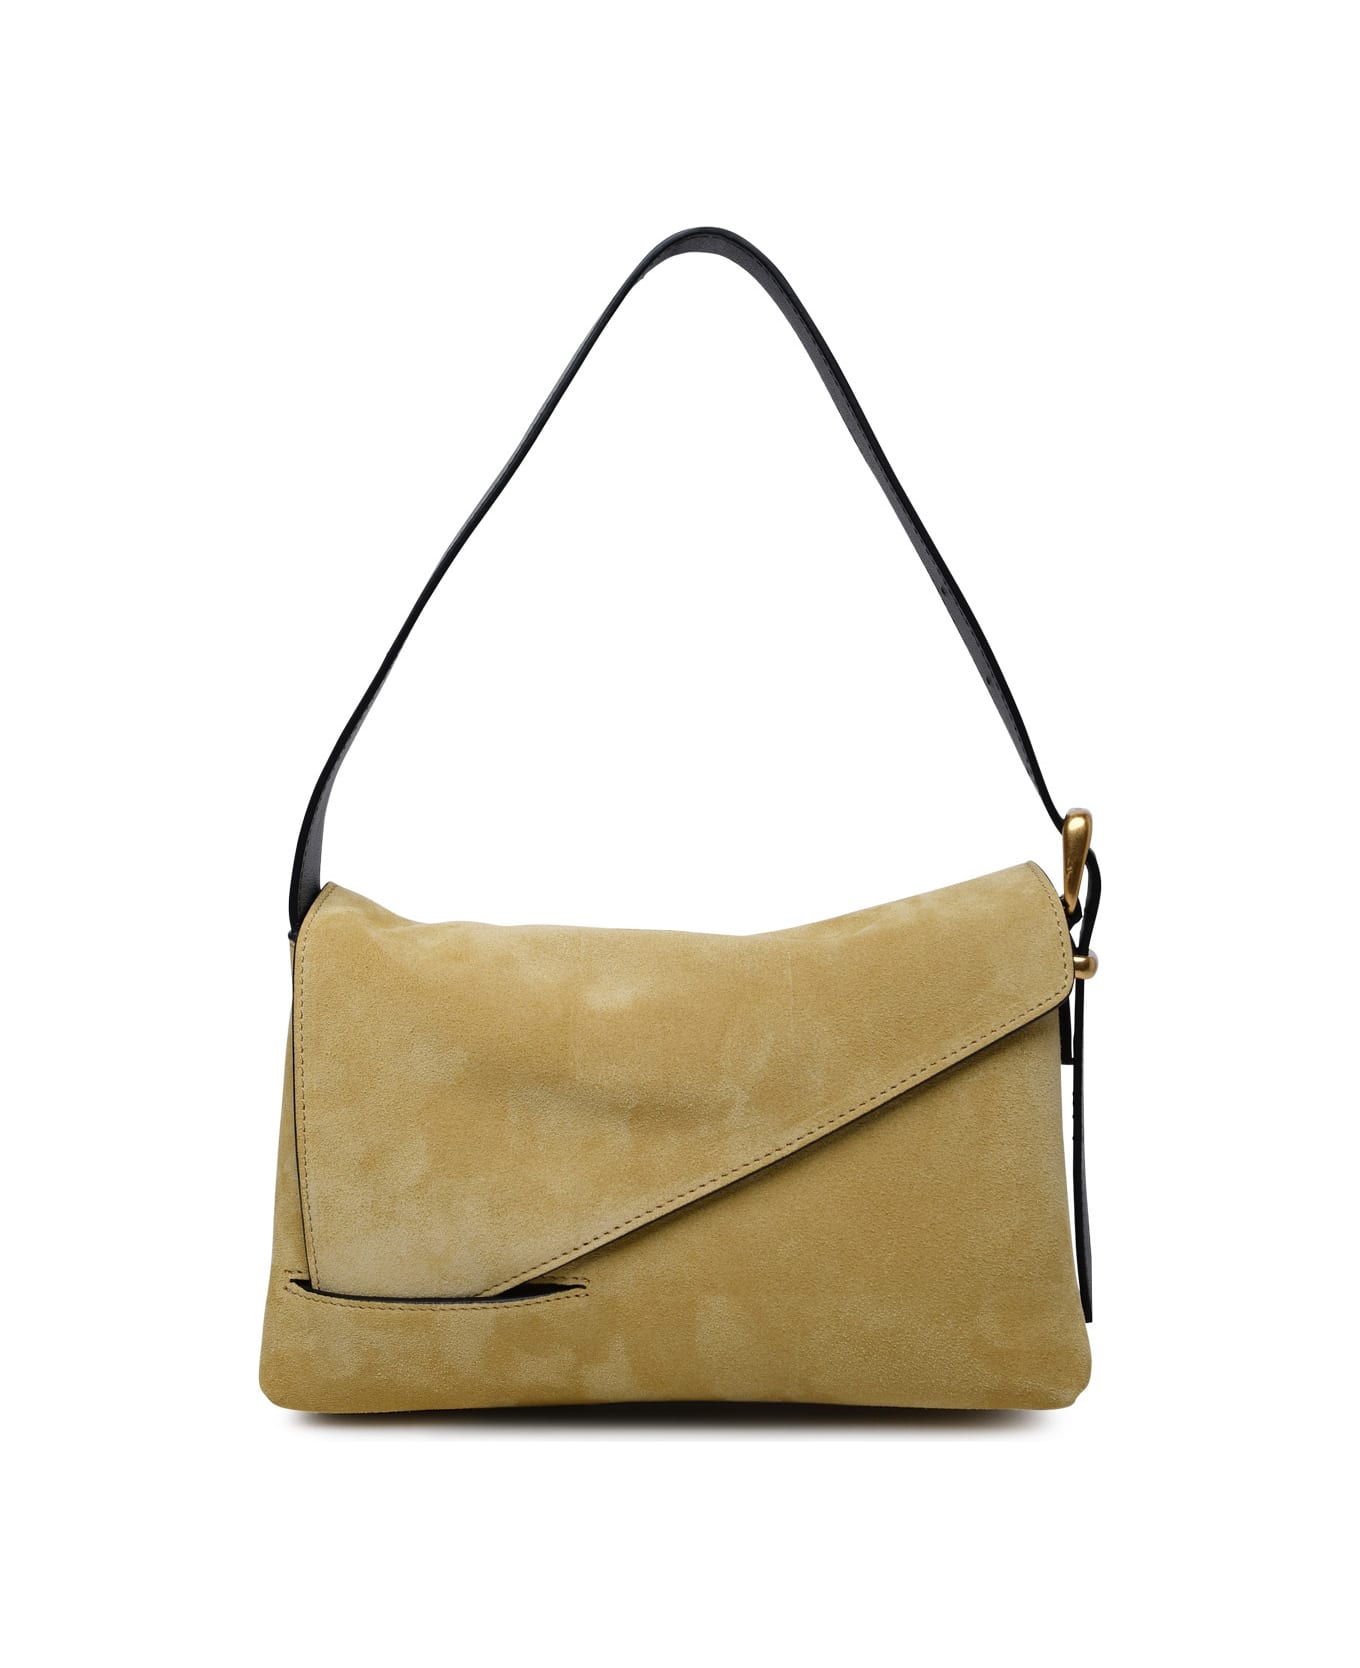 Wandler 'oscar Baguette' Sand Calf Leather Bag - Beige